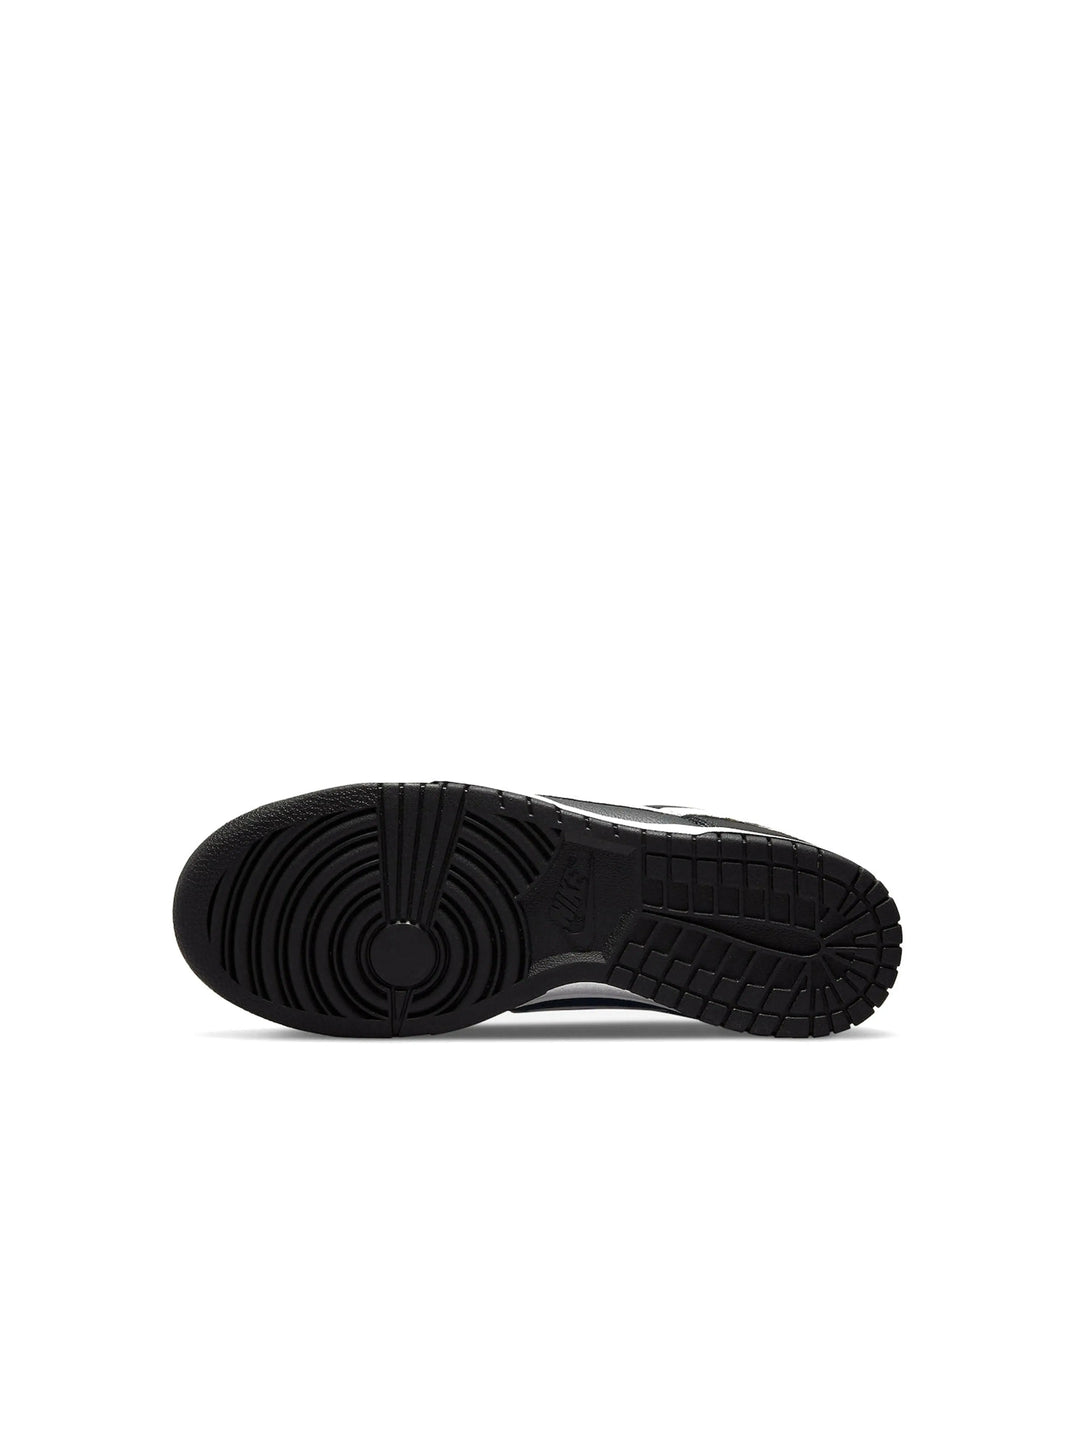 Nike Dunk Low Black White [2022] (GS) Prior